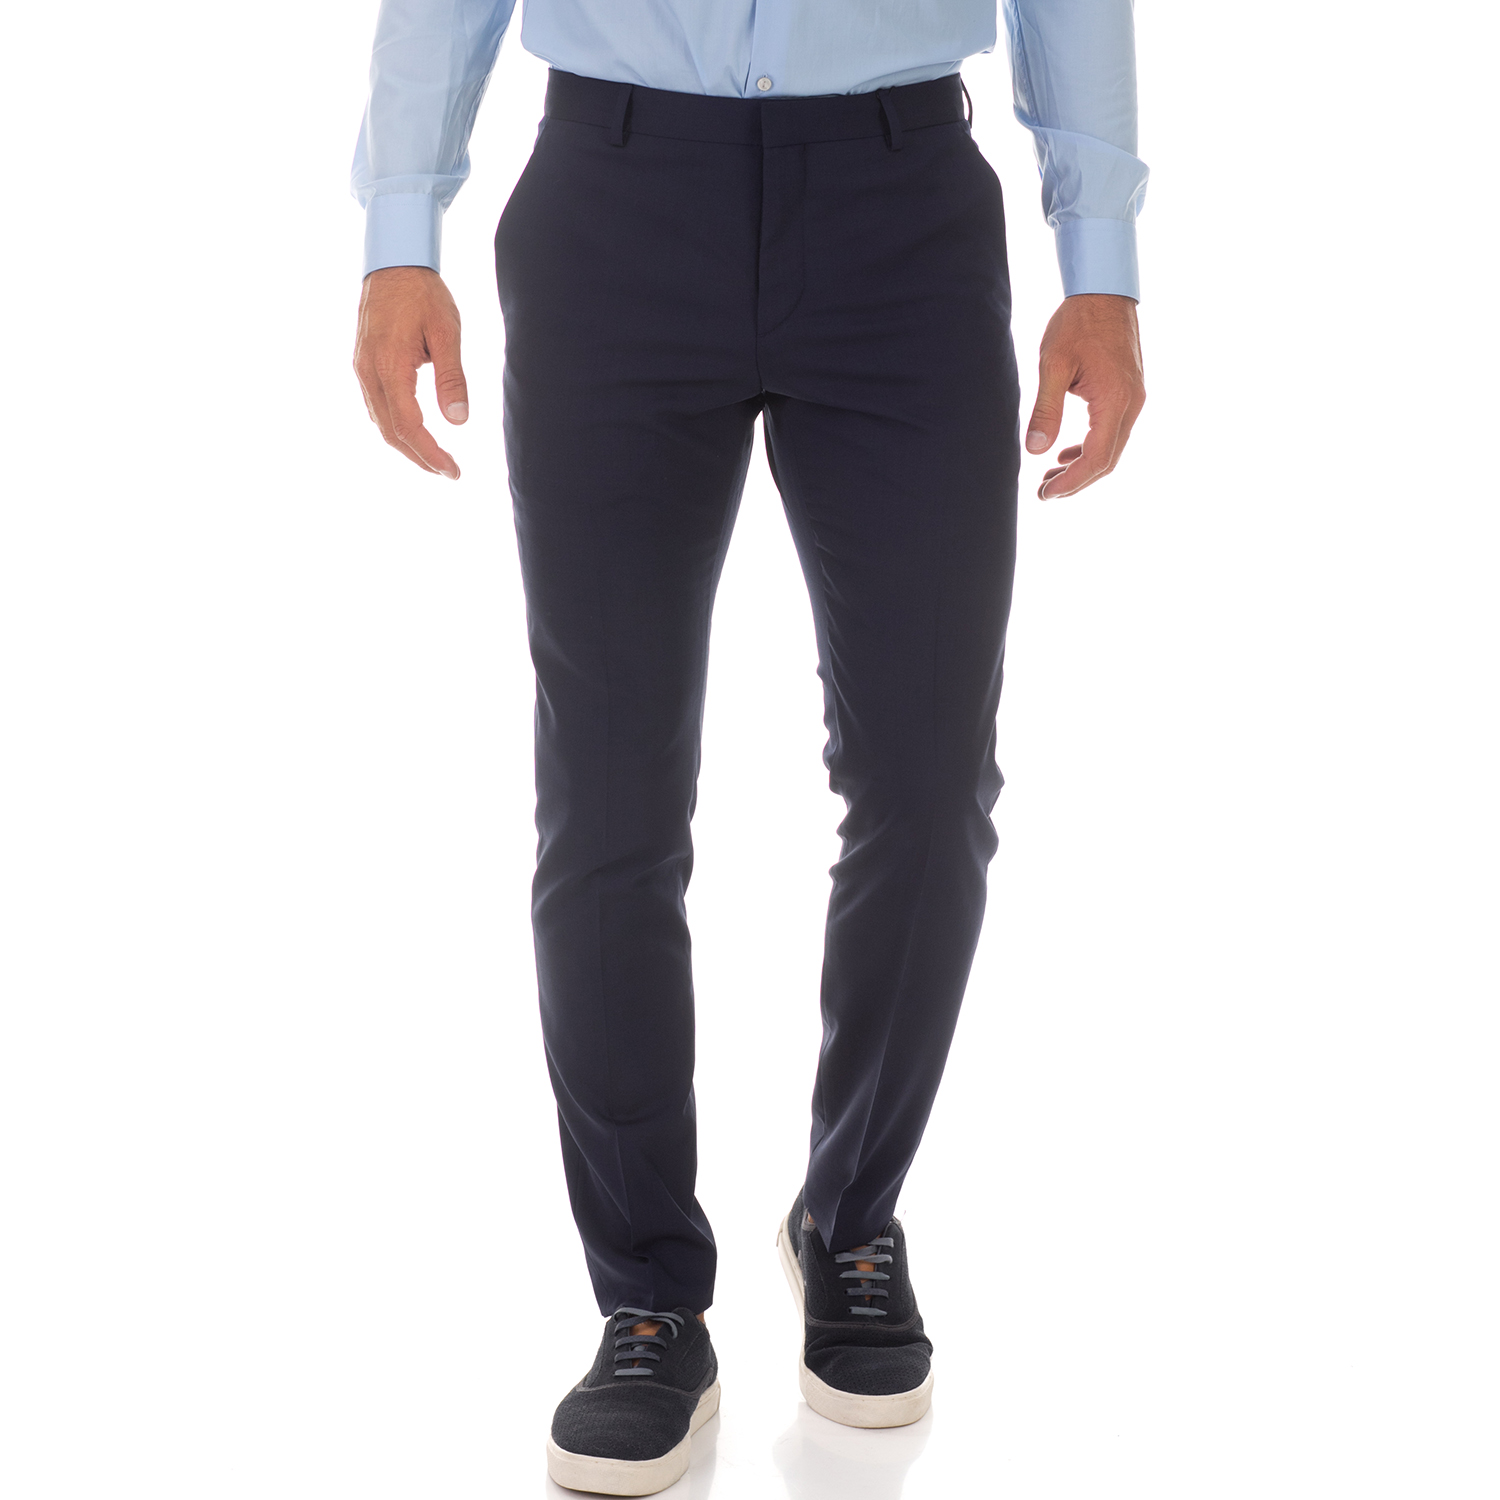 CK - Ανδρικό παντελόνι CK μπλε Ανδρικά/Ρούχα/Παντελόνια/Ισια Γραμμή